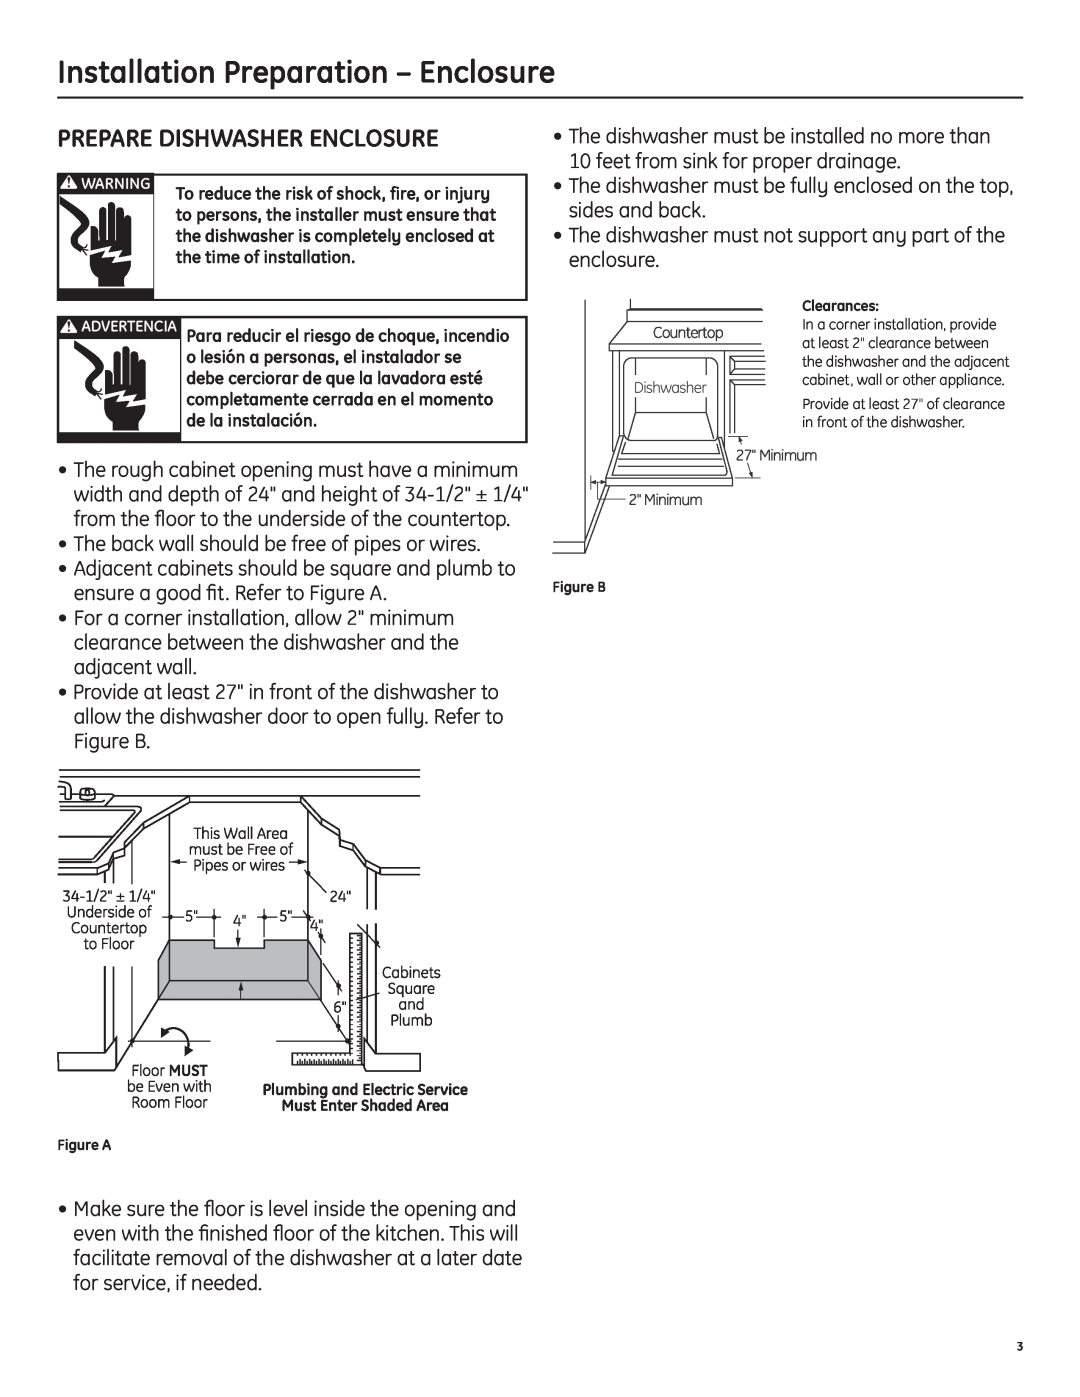 GE 206C1559P195 installation instructions Installation Preparation - Enclosure, Prepare Dishwasher Enclosure 